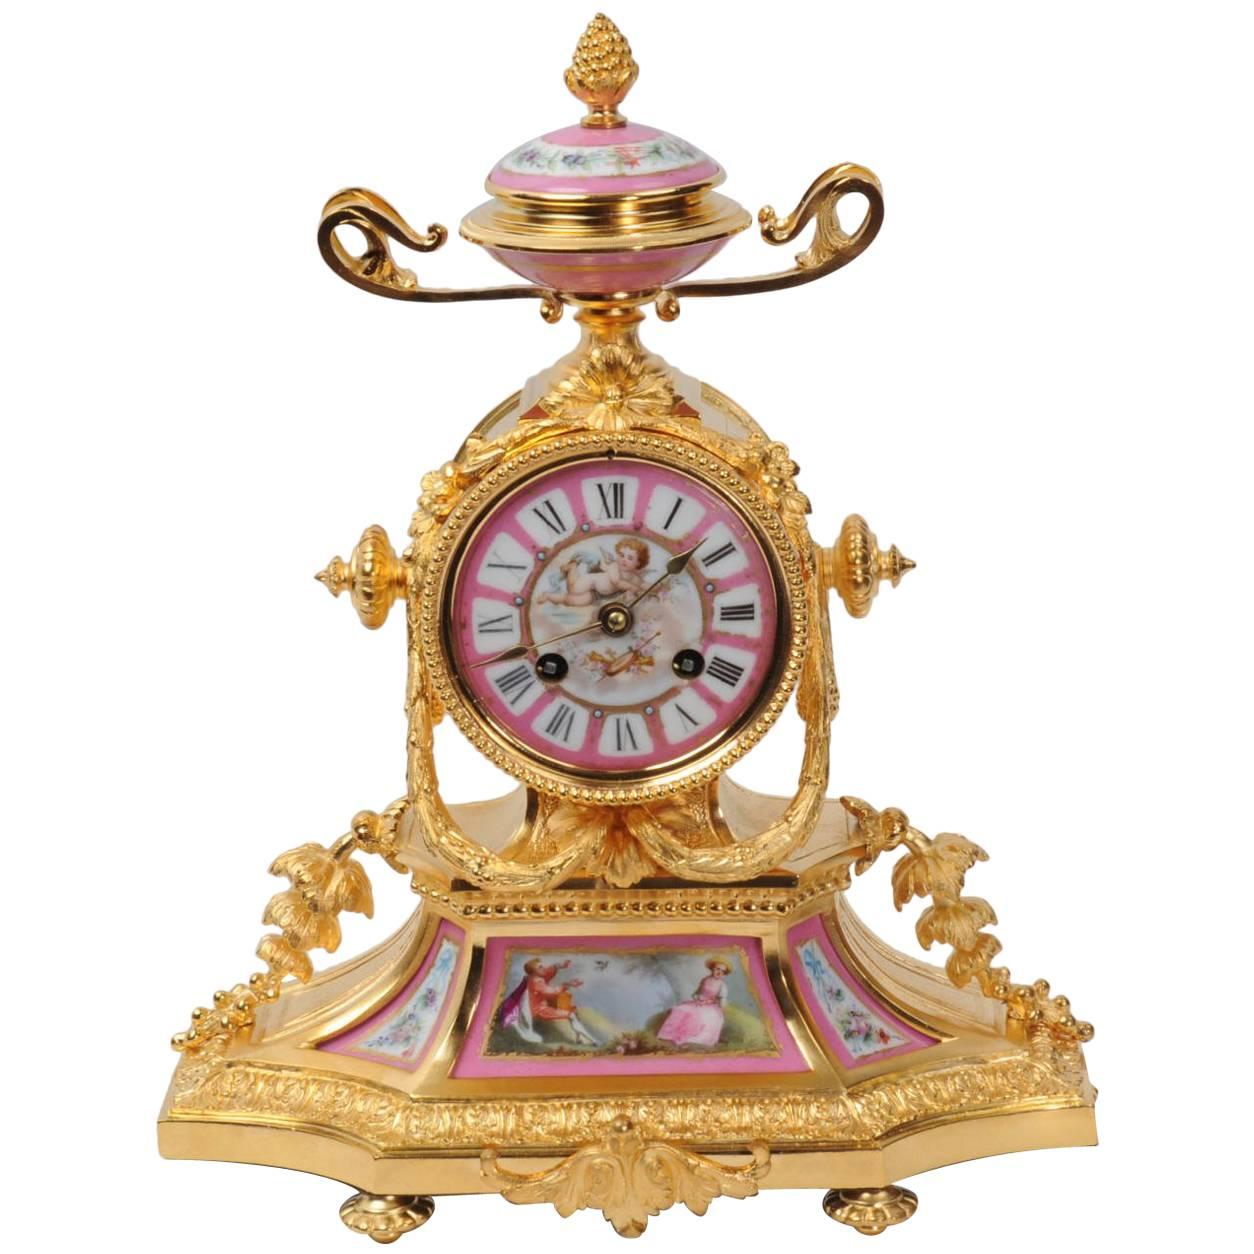 Japy Freres Ormolu and Sevres Porcelain Boudoir Clock